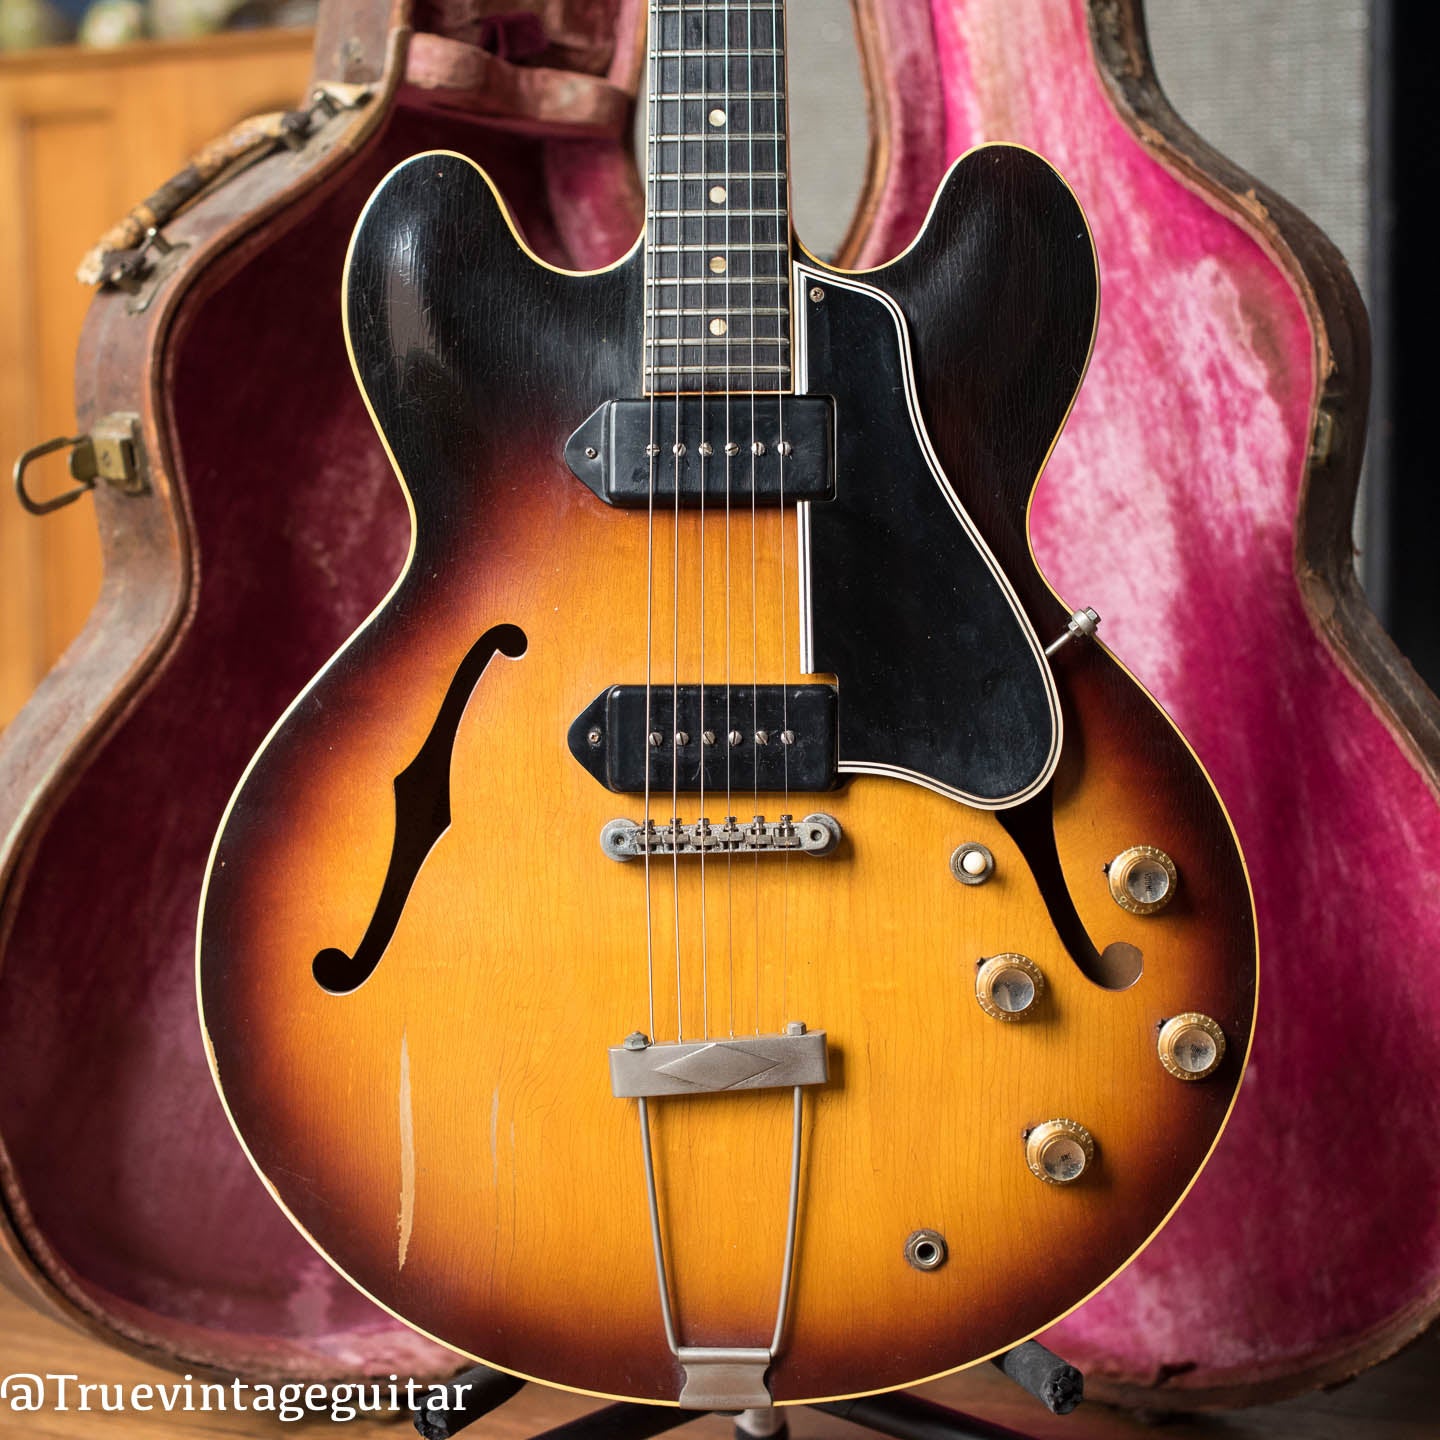 1961 Gibson ES-330 electric guitar